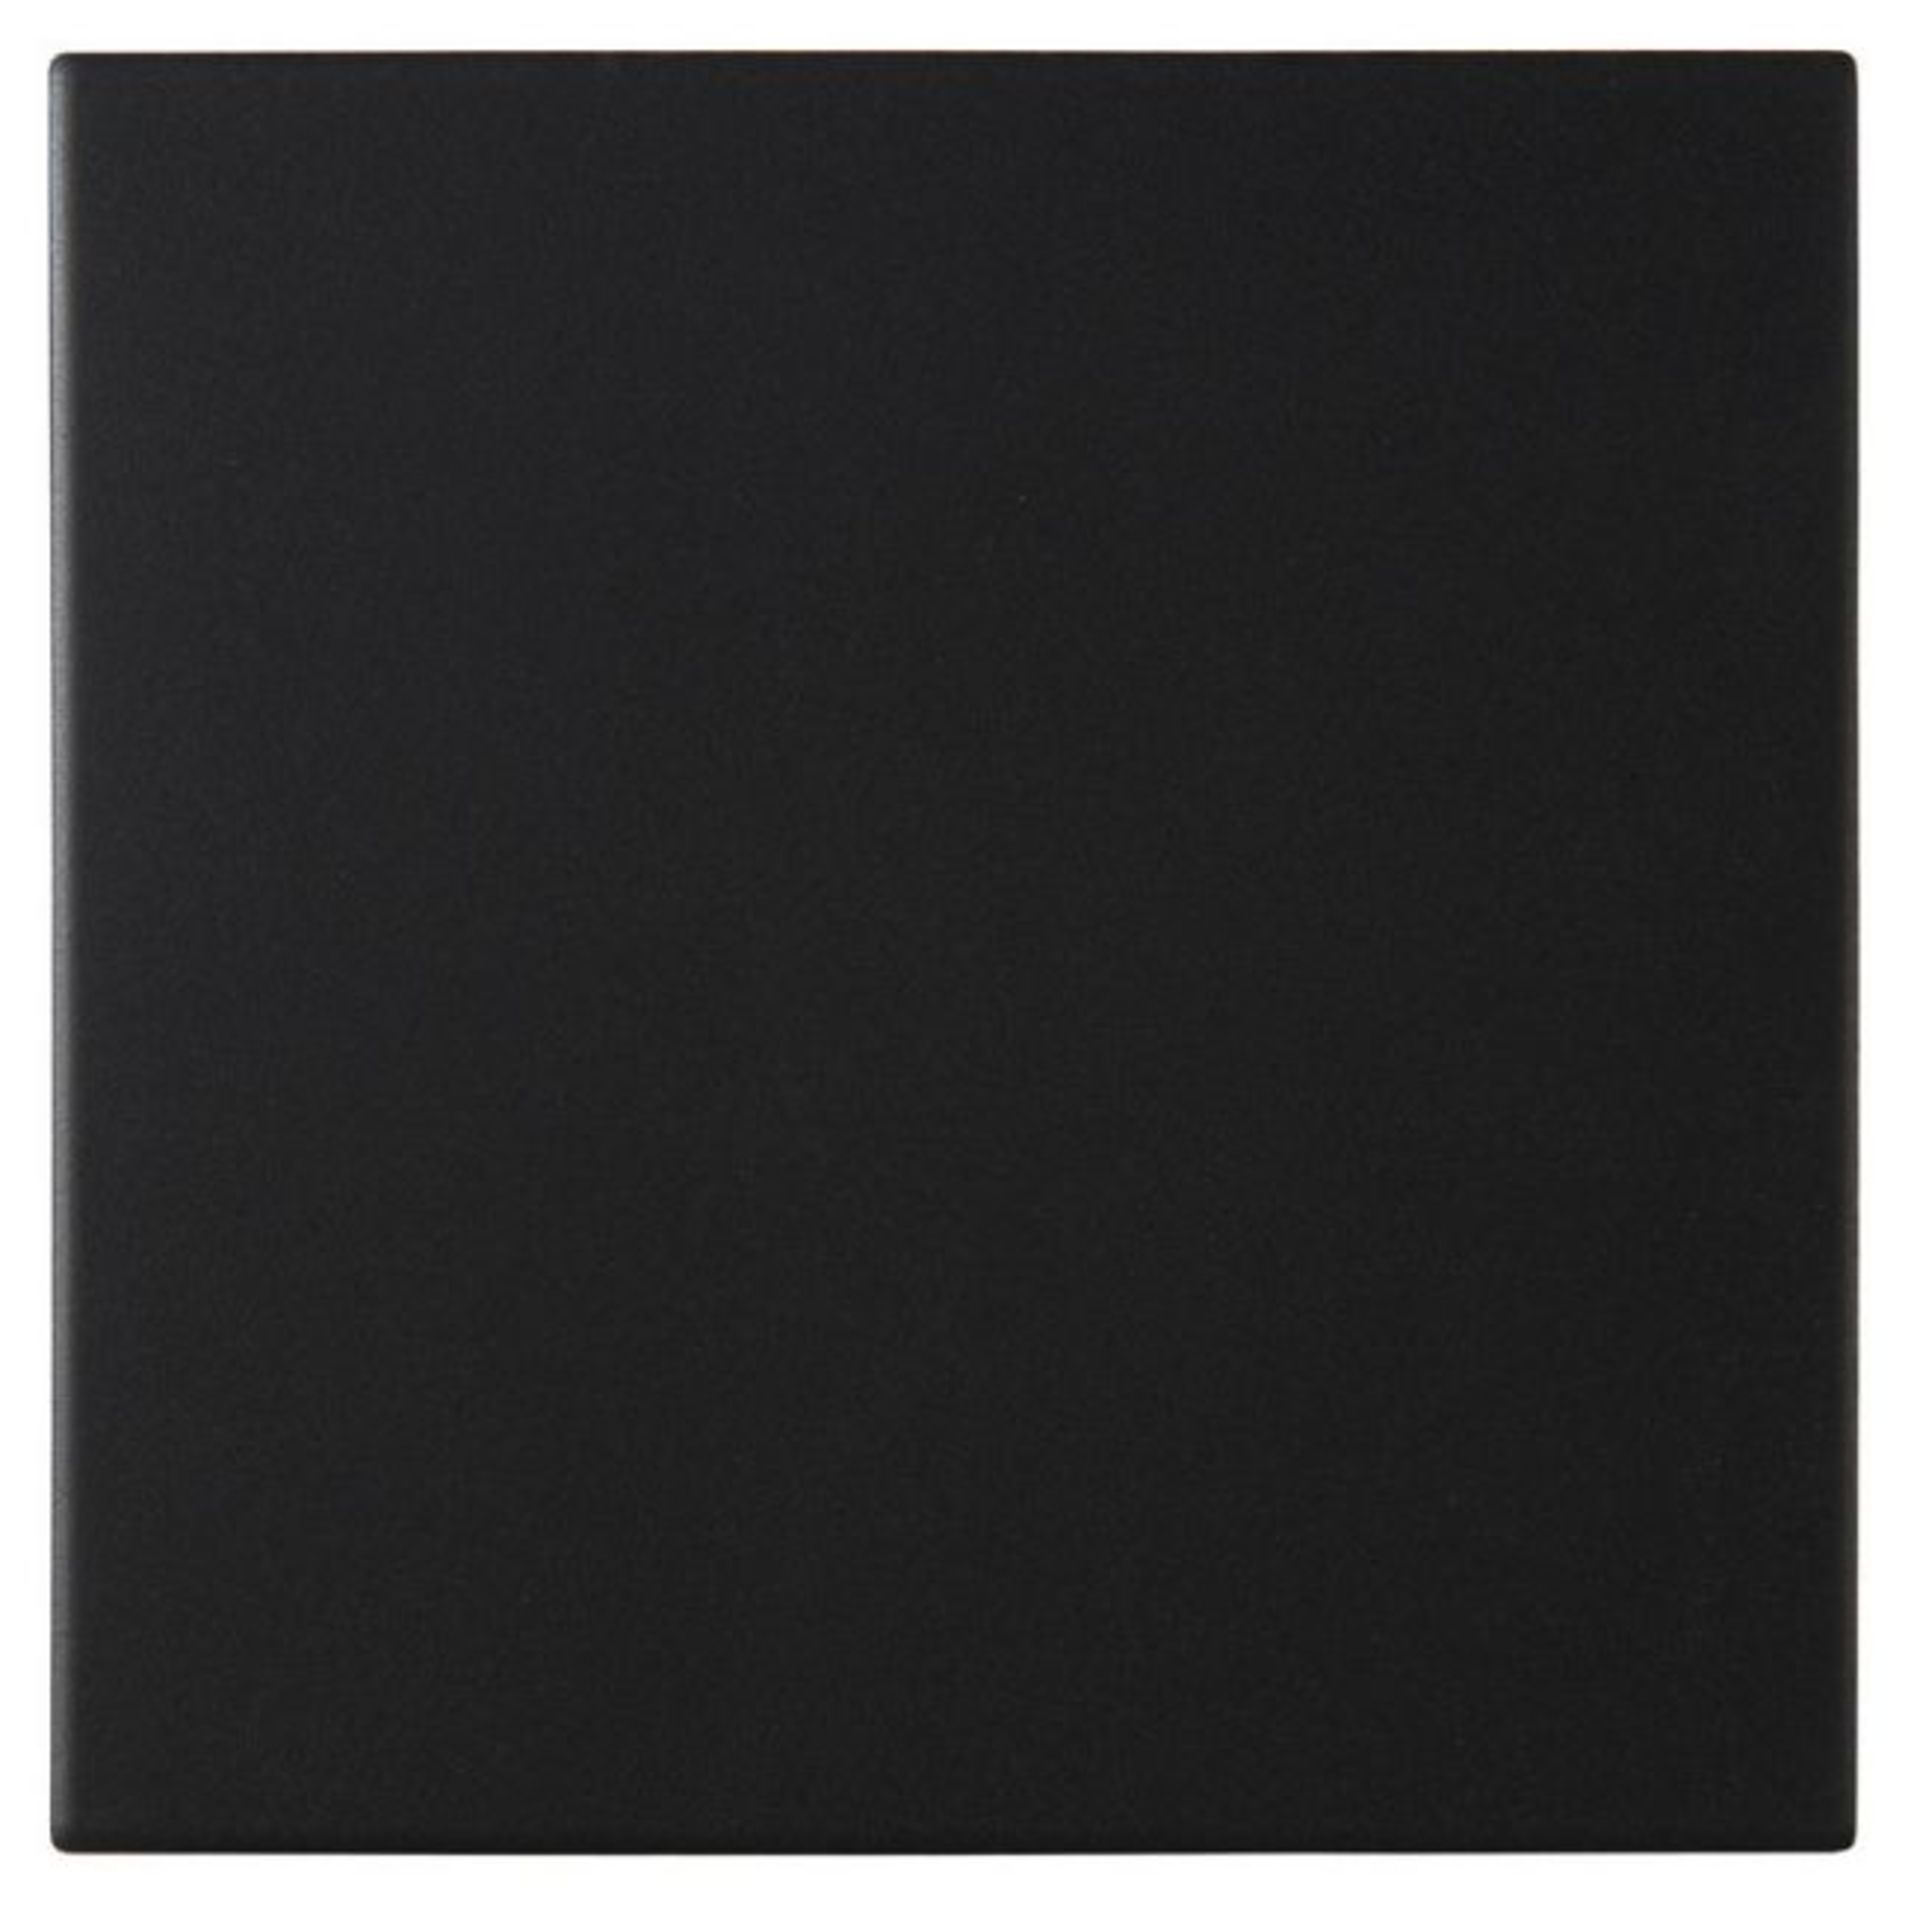 New 14.5m2 Pescaro Black Matt Plain Ceramic Wall & Floor Tile. 33.3x33.3 cm Per Tile. Sli... - Image 2 of 2